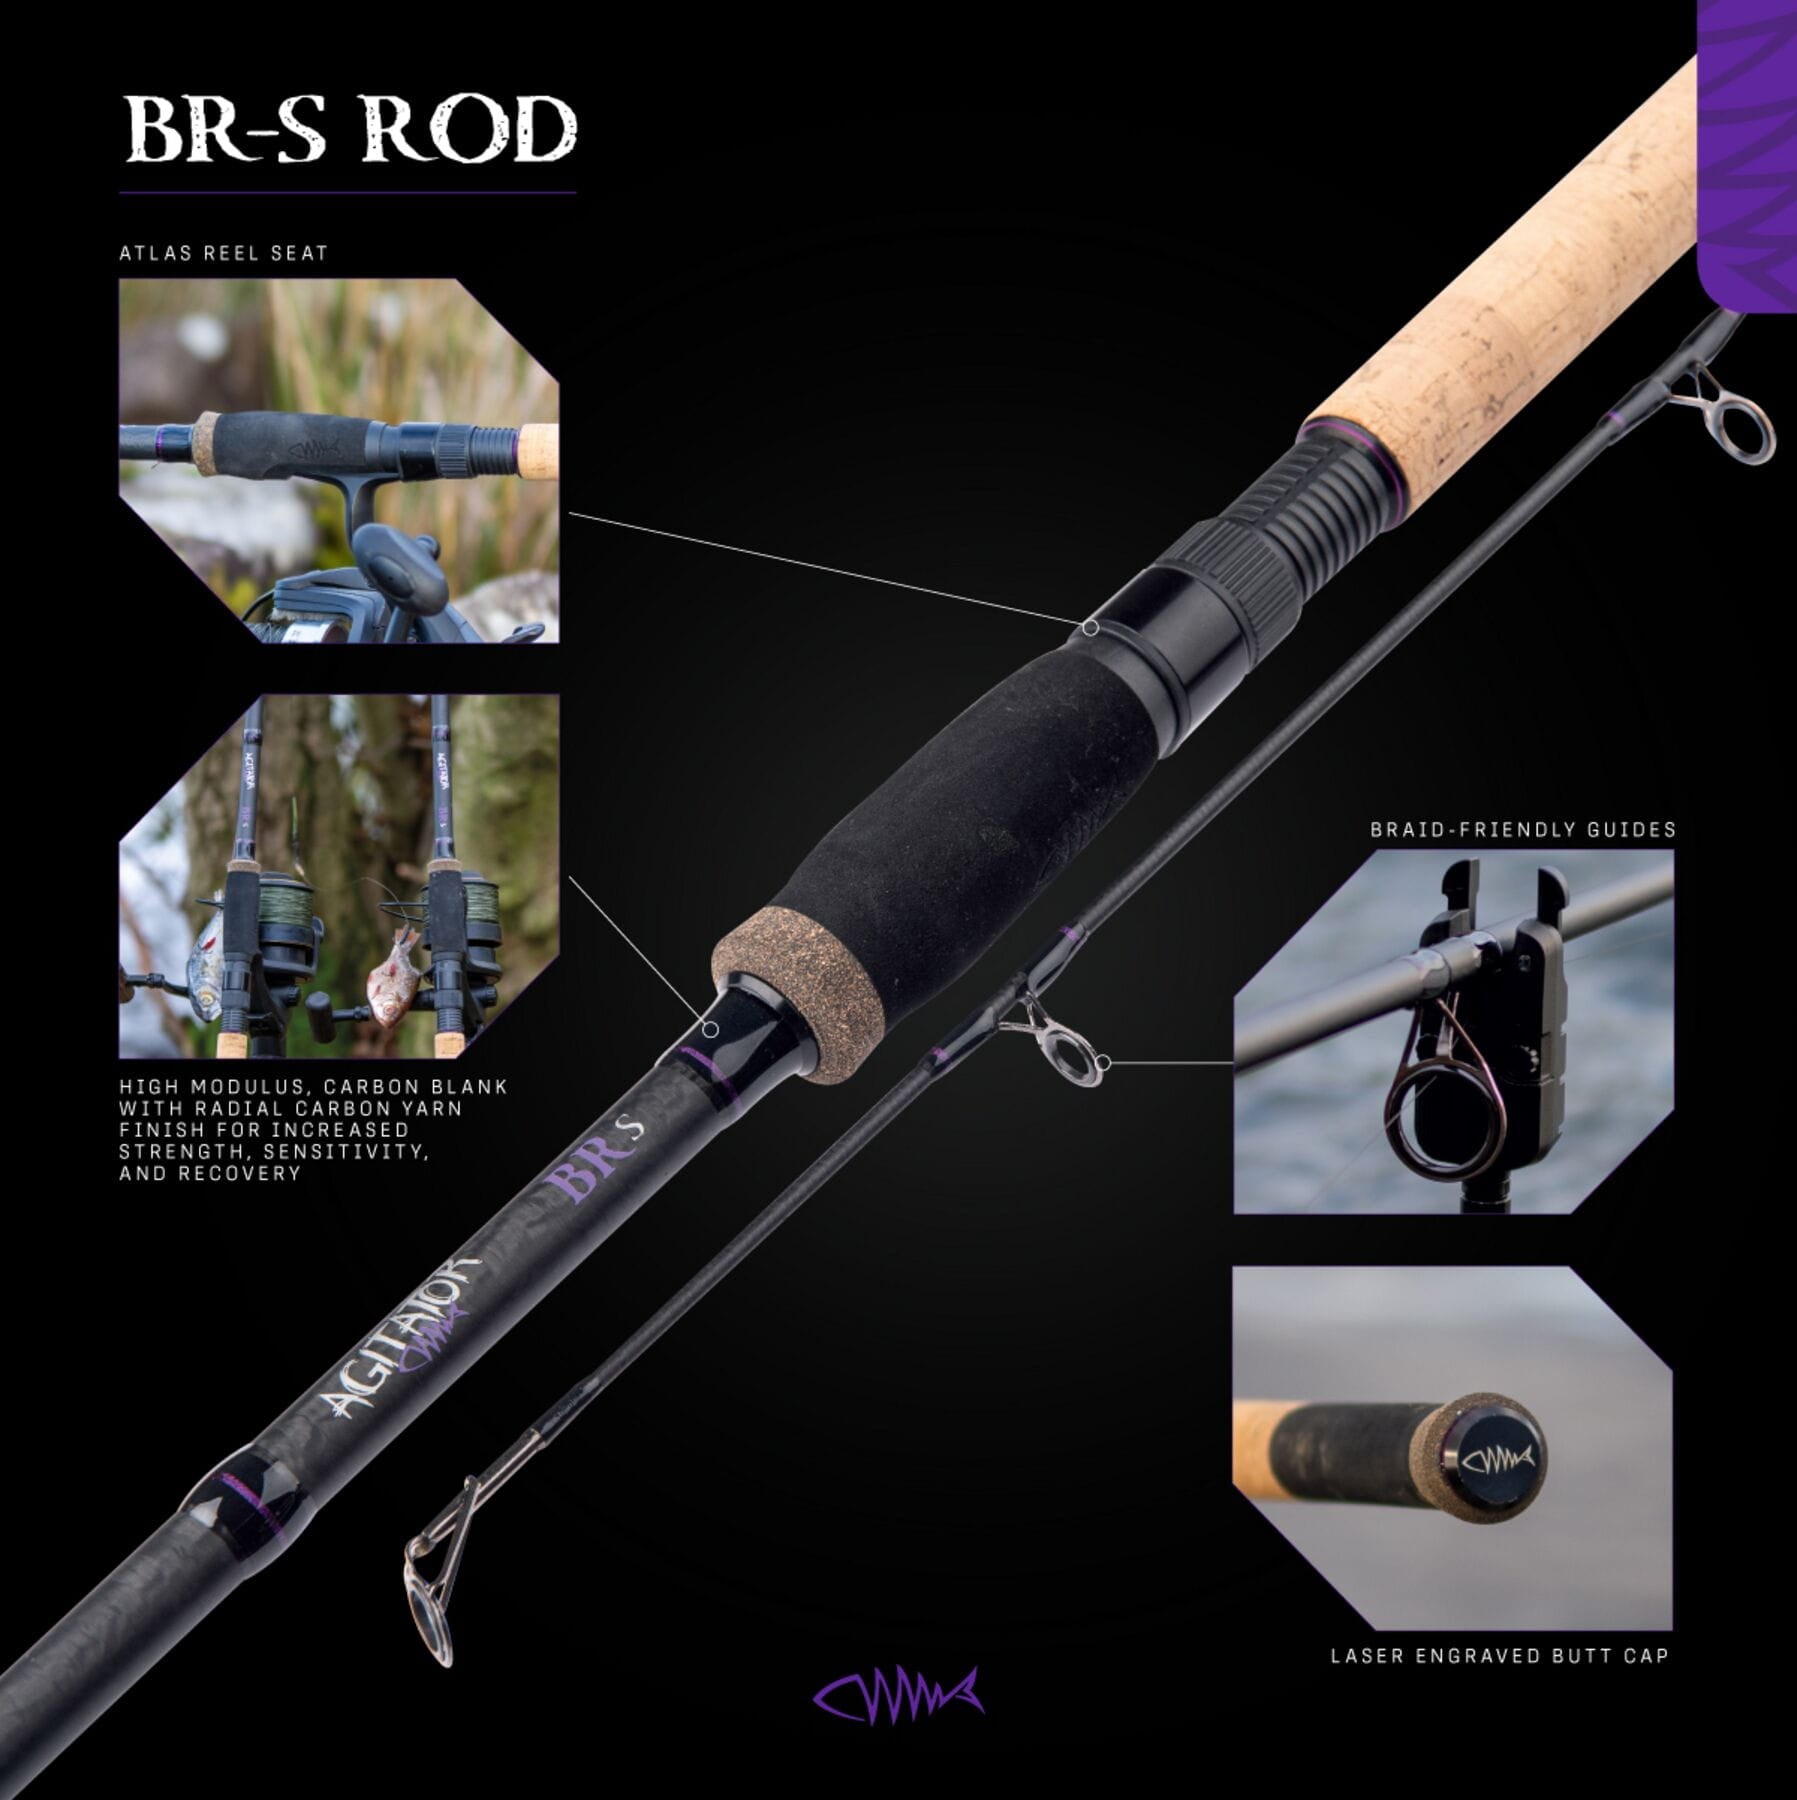 Drennan Esox Piker Bait Rod - 12ft - 3lb – Anglers World